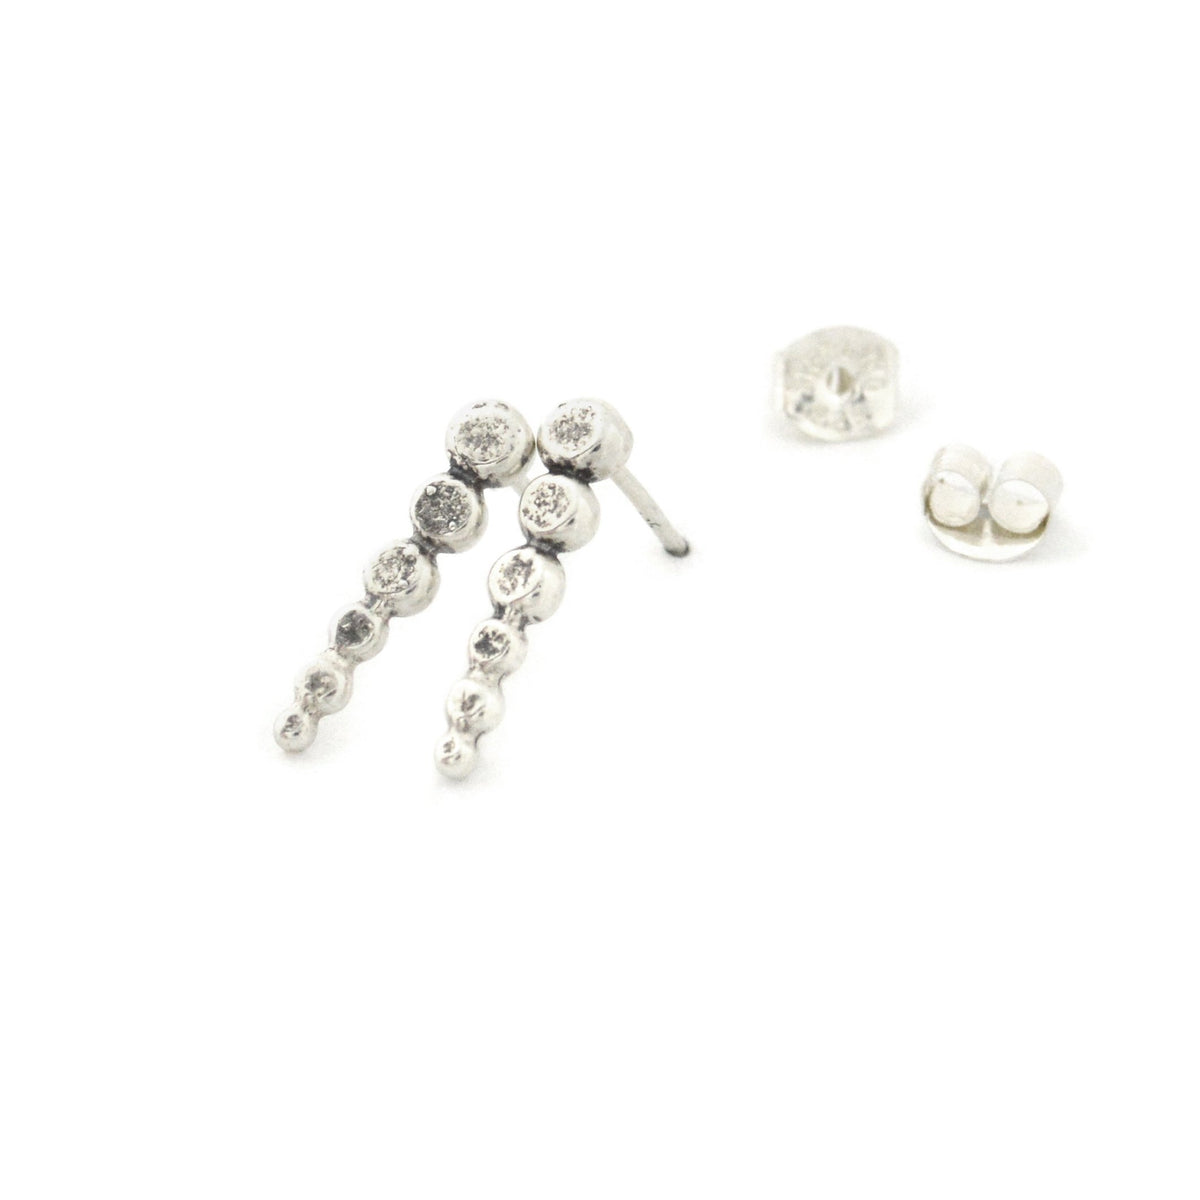 Pebble Drop Post Earrings - Silver Earrings   3719 - handmade by Beth Millner Jewelry